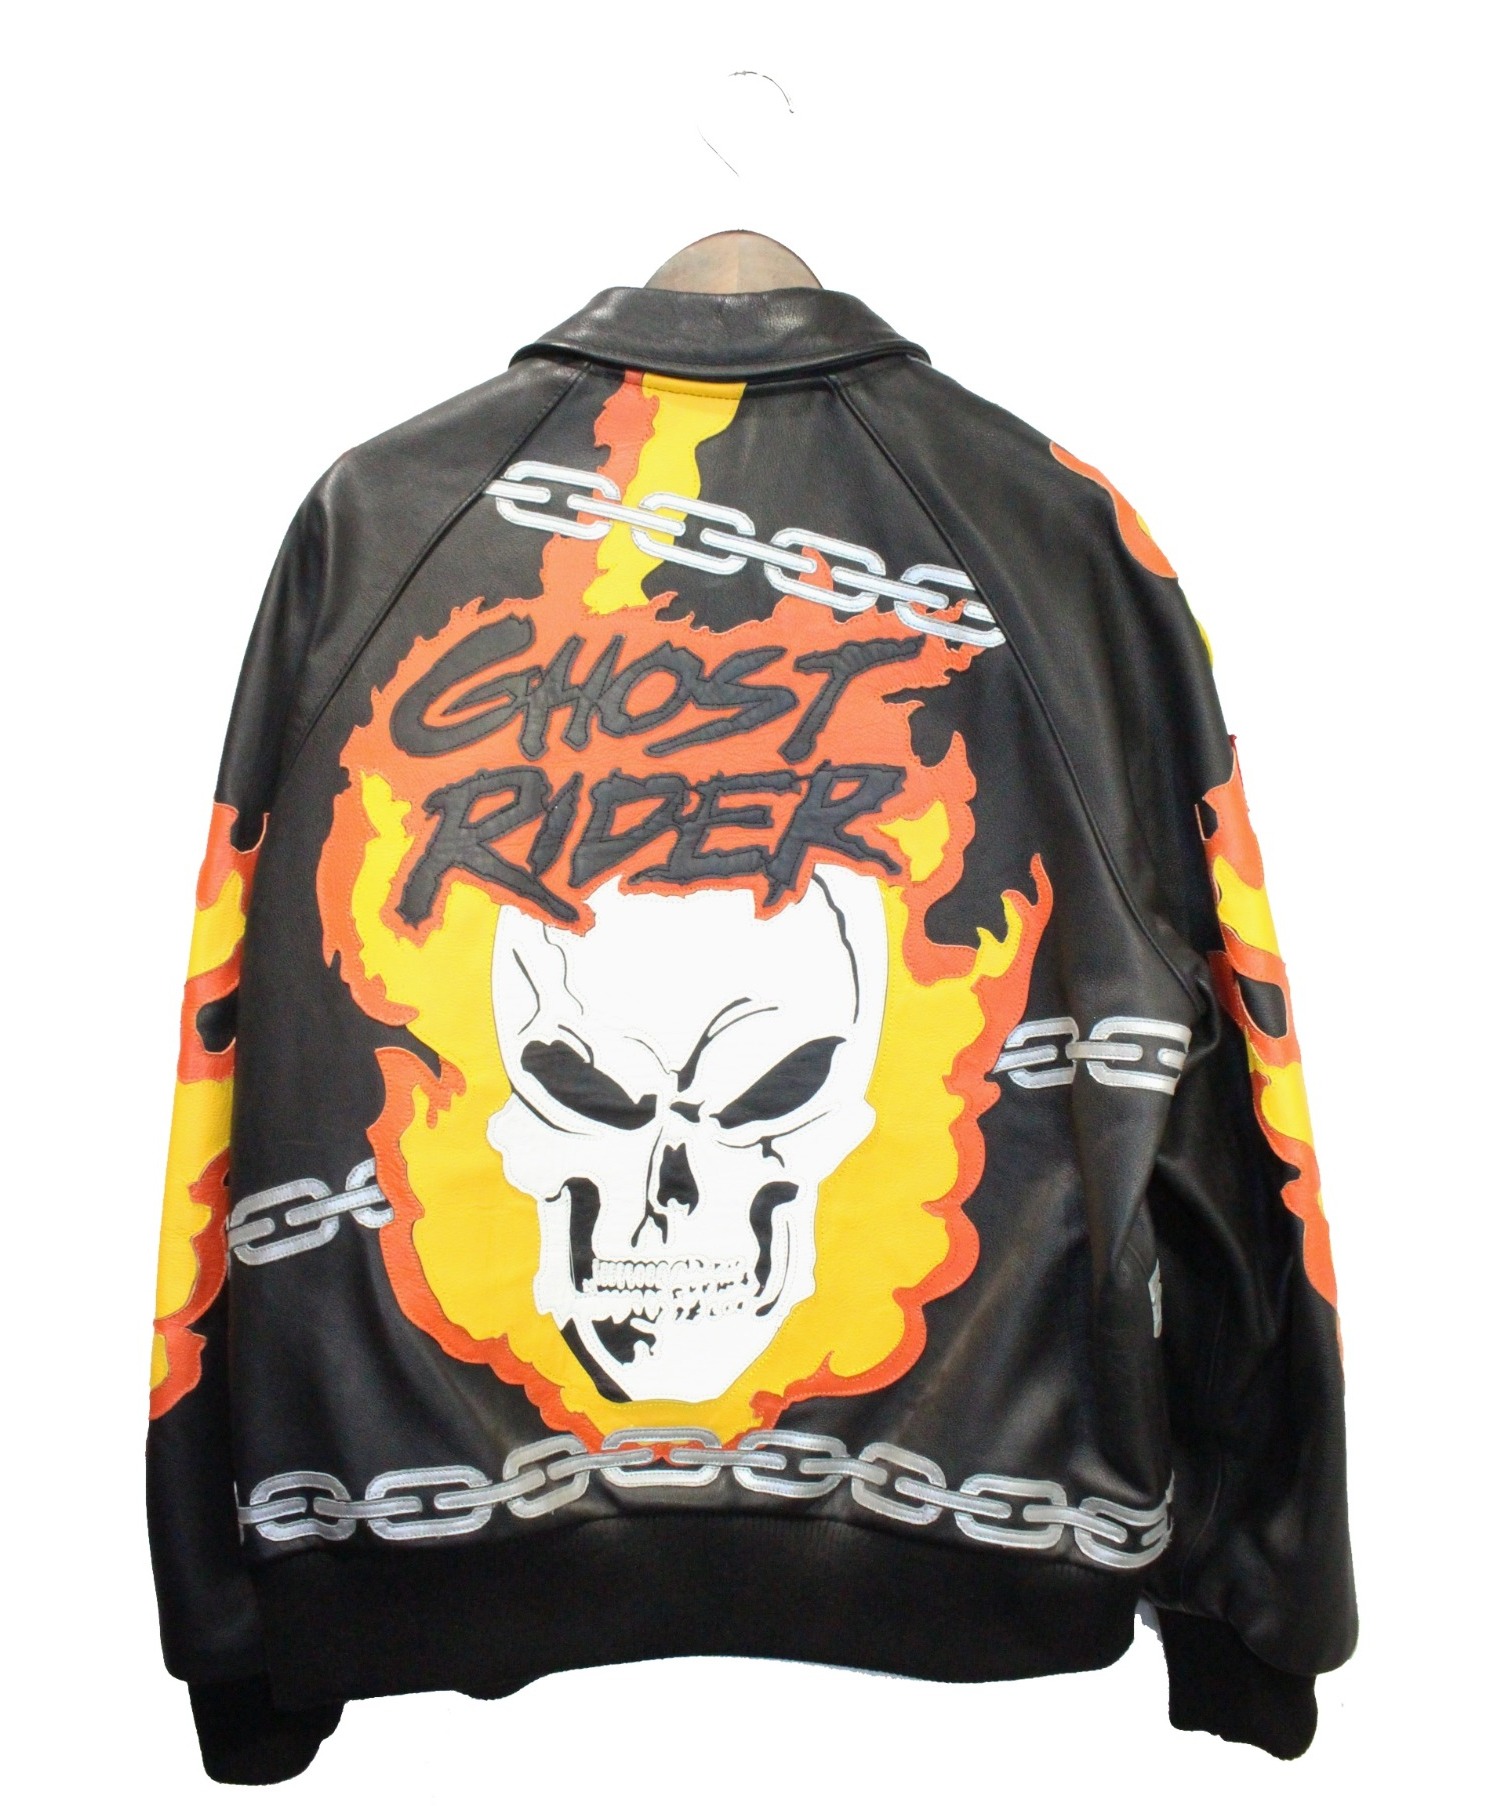 Mサイズ Supreme Vanson Ghost Rider Jack